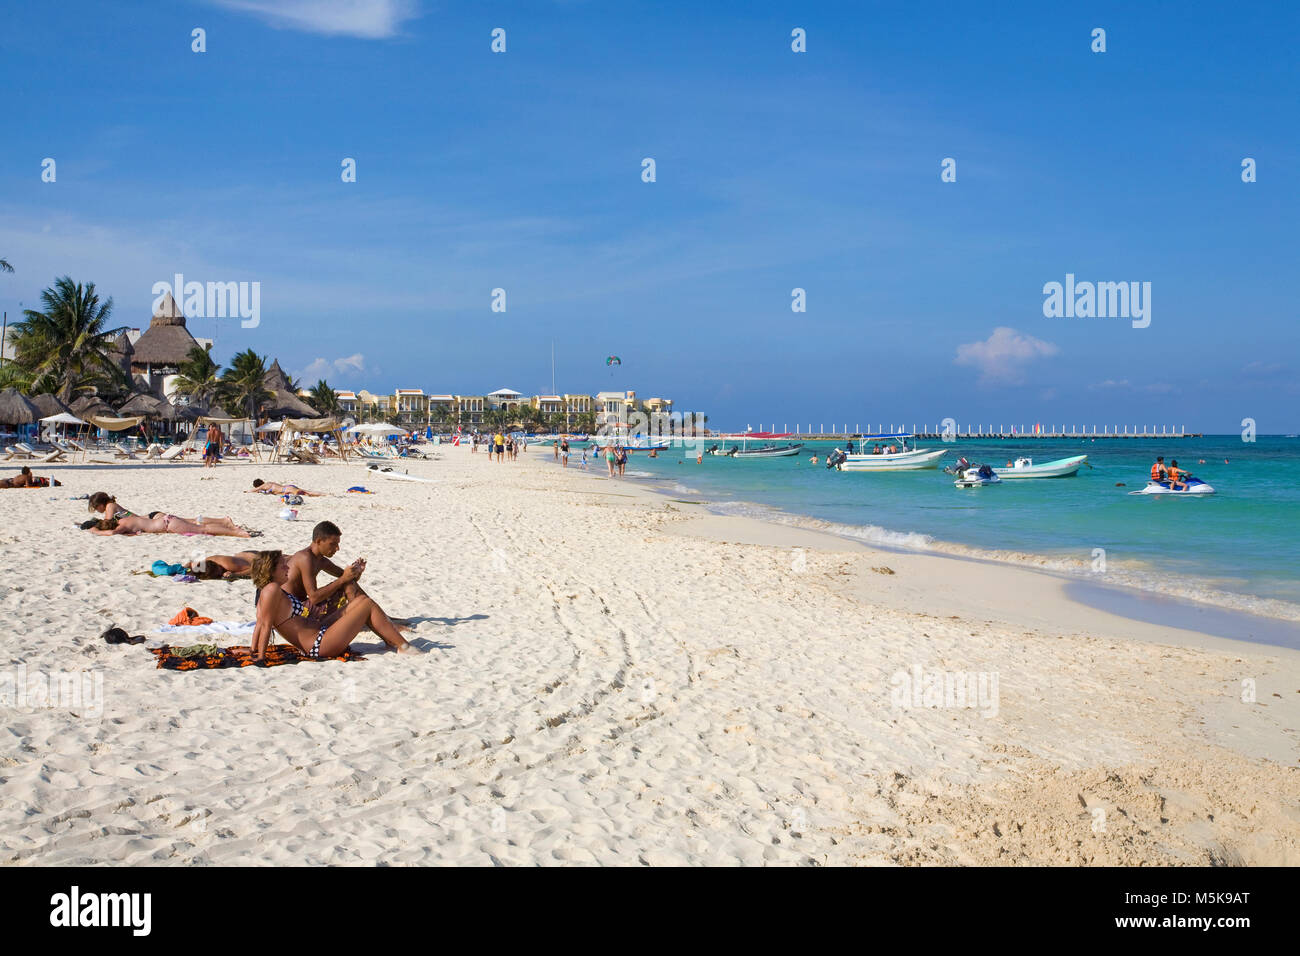 Sonnenbad am Strand von Playa del Carmen, Mexiko, Karibik | Tourists sunbathing at the beach of Playa del Carmen, Mexico, Caribbean Stock Photo